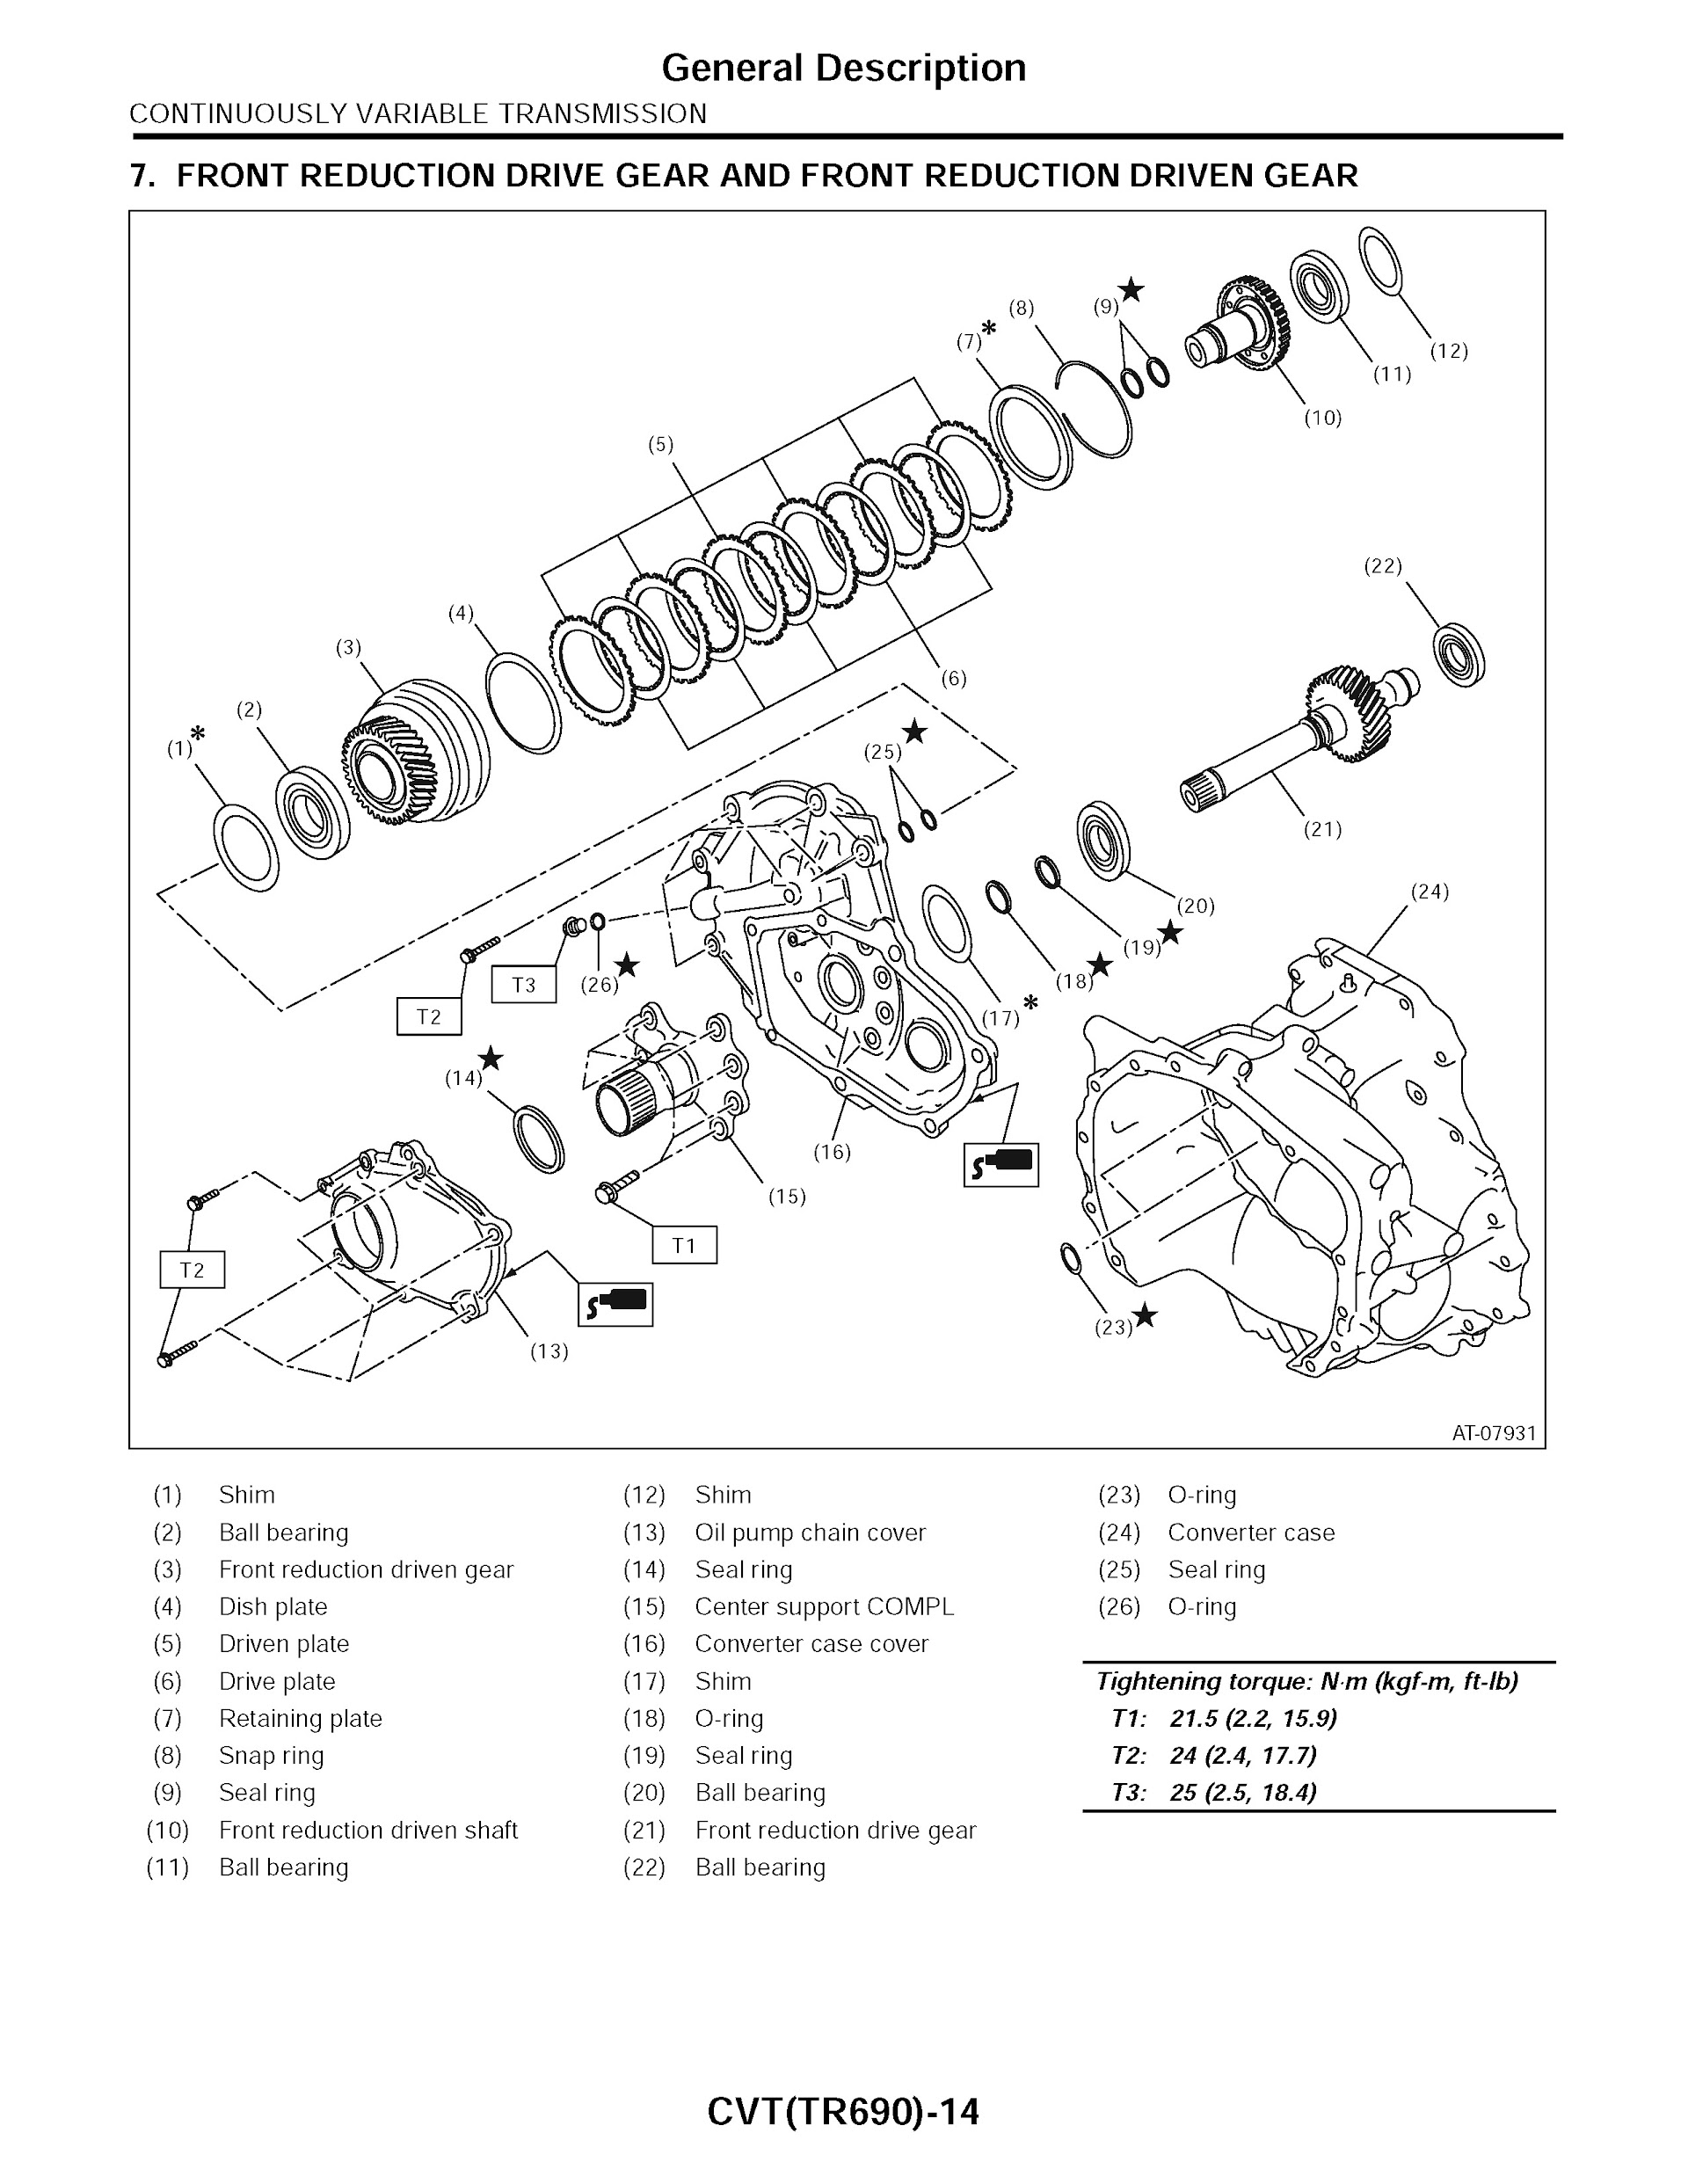 2015 Subaru Forester Repair Manual, Transmission Components